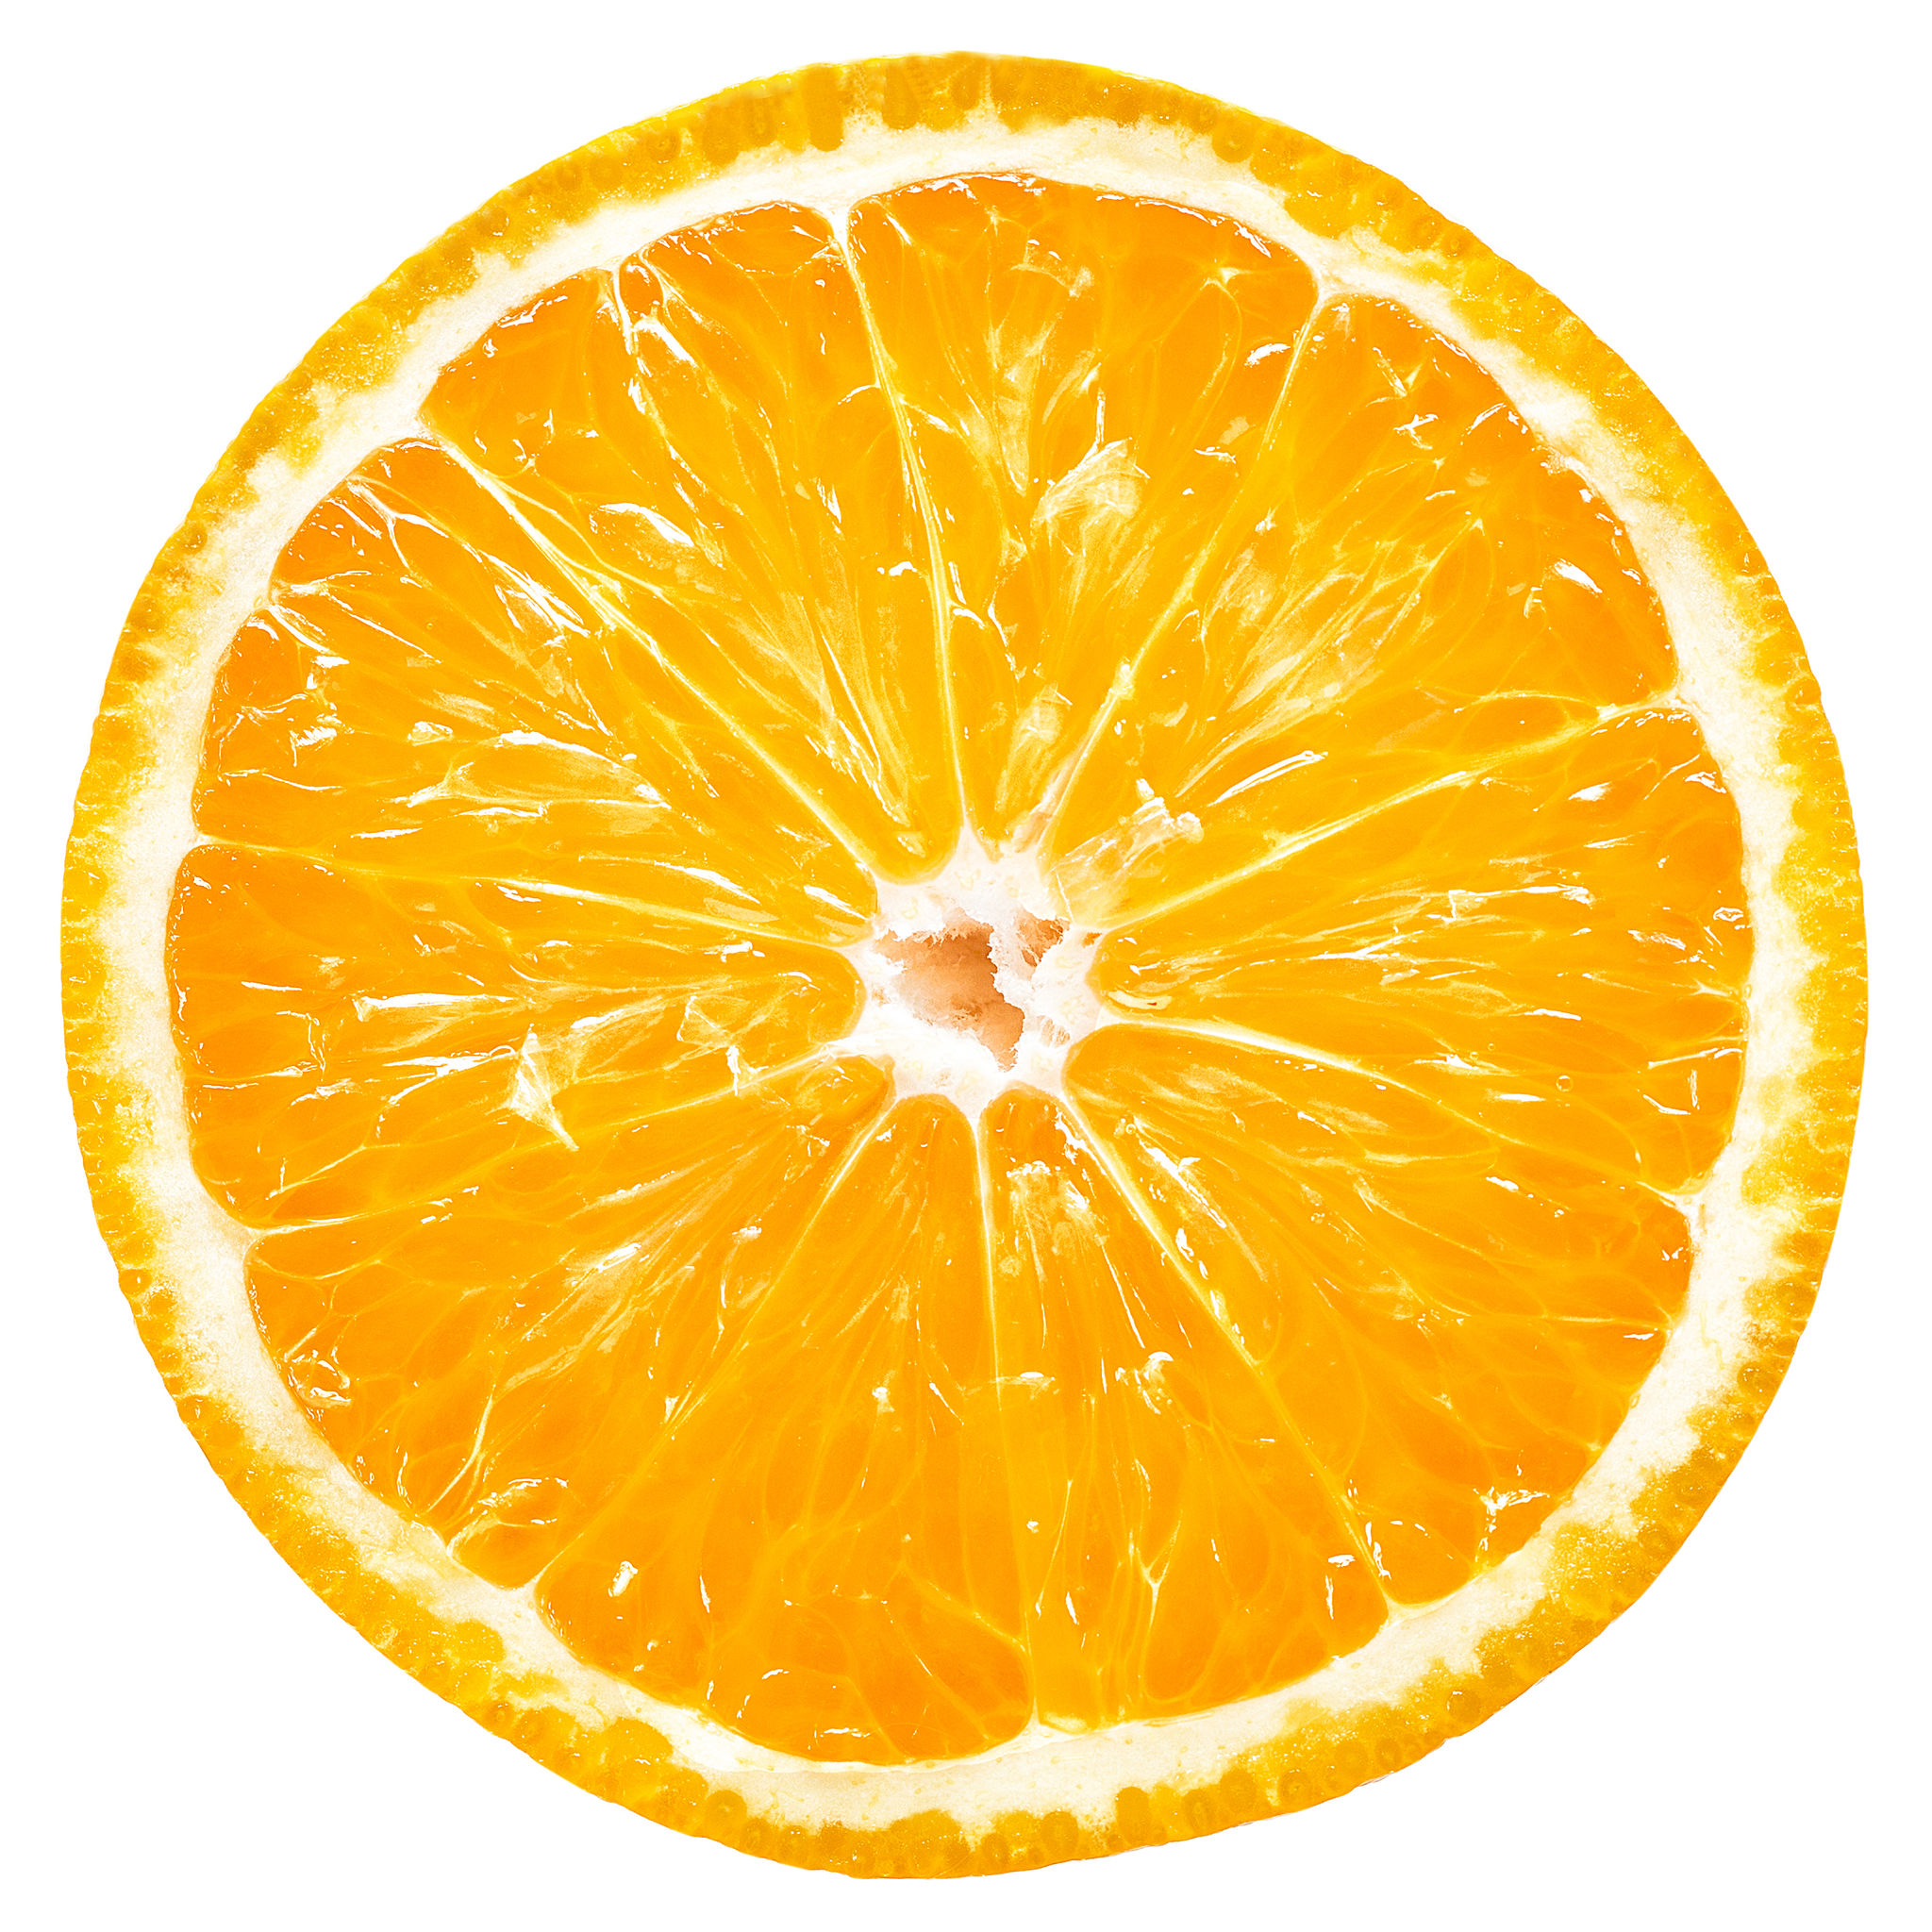 Orange slice to indicate the terpene limonene